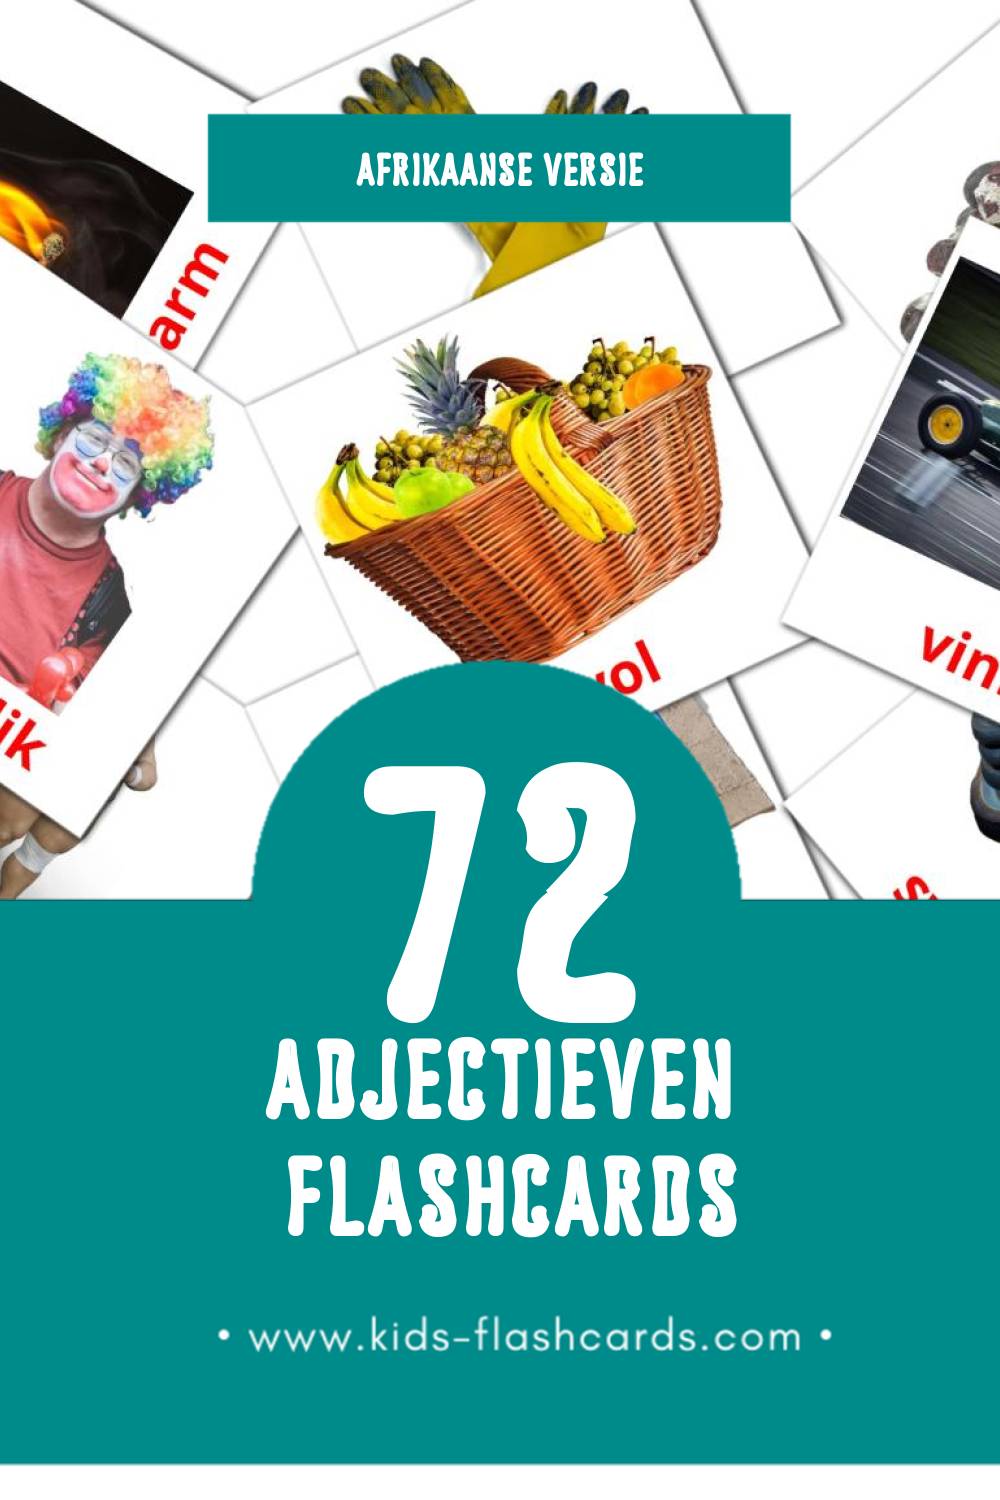 Visuele Byvoeglike naamwoorde Flashcards voor Kleuters (72 kaarten in het Afrikaans)